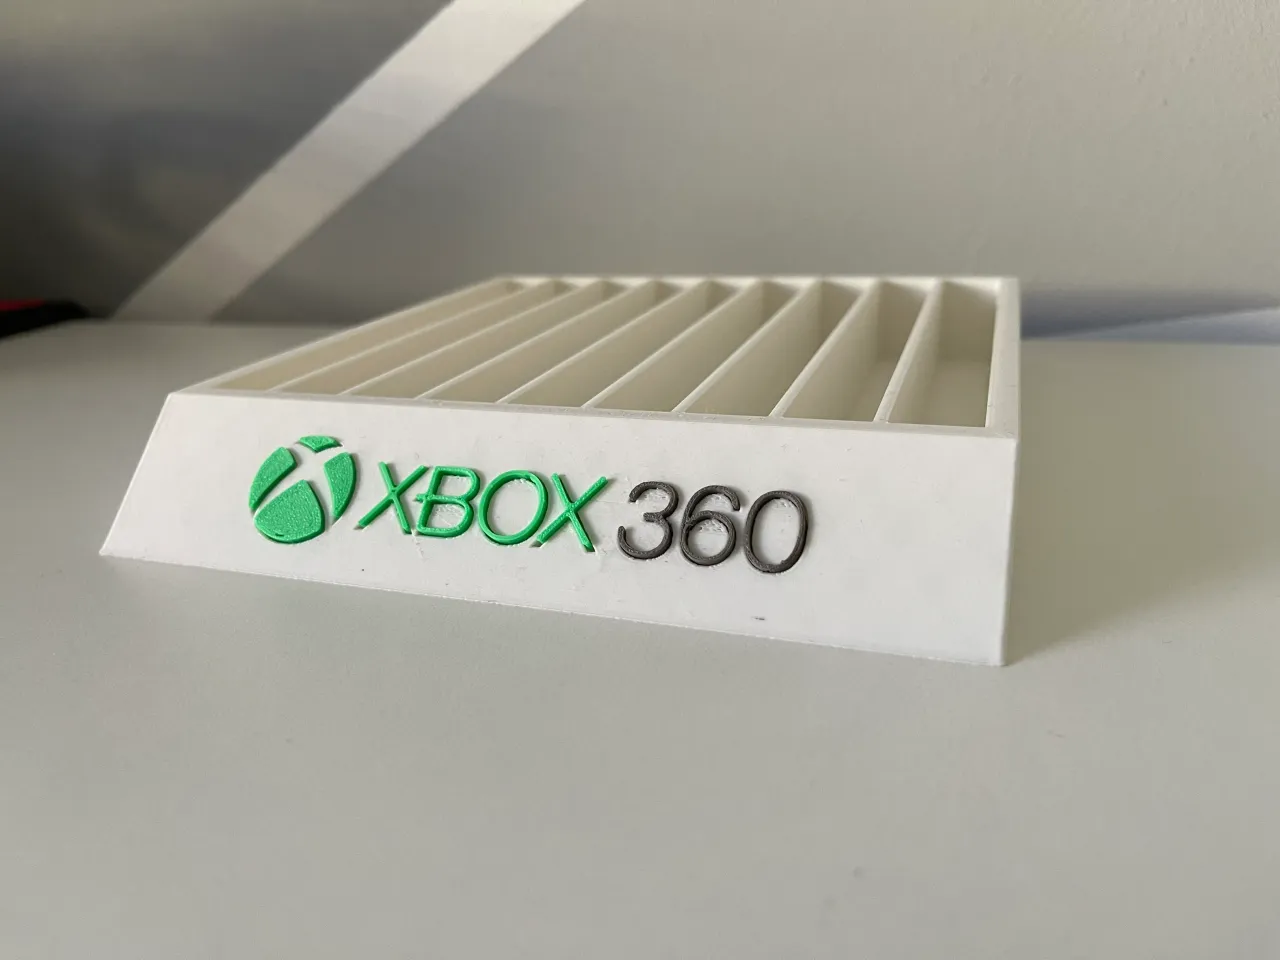 Download jogo xbox 360 gratis